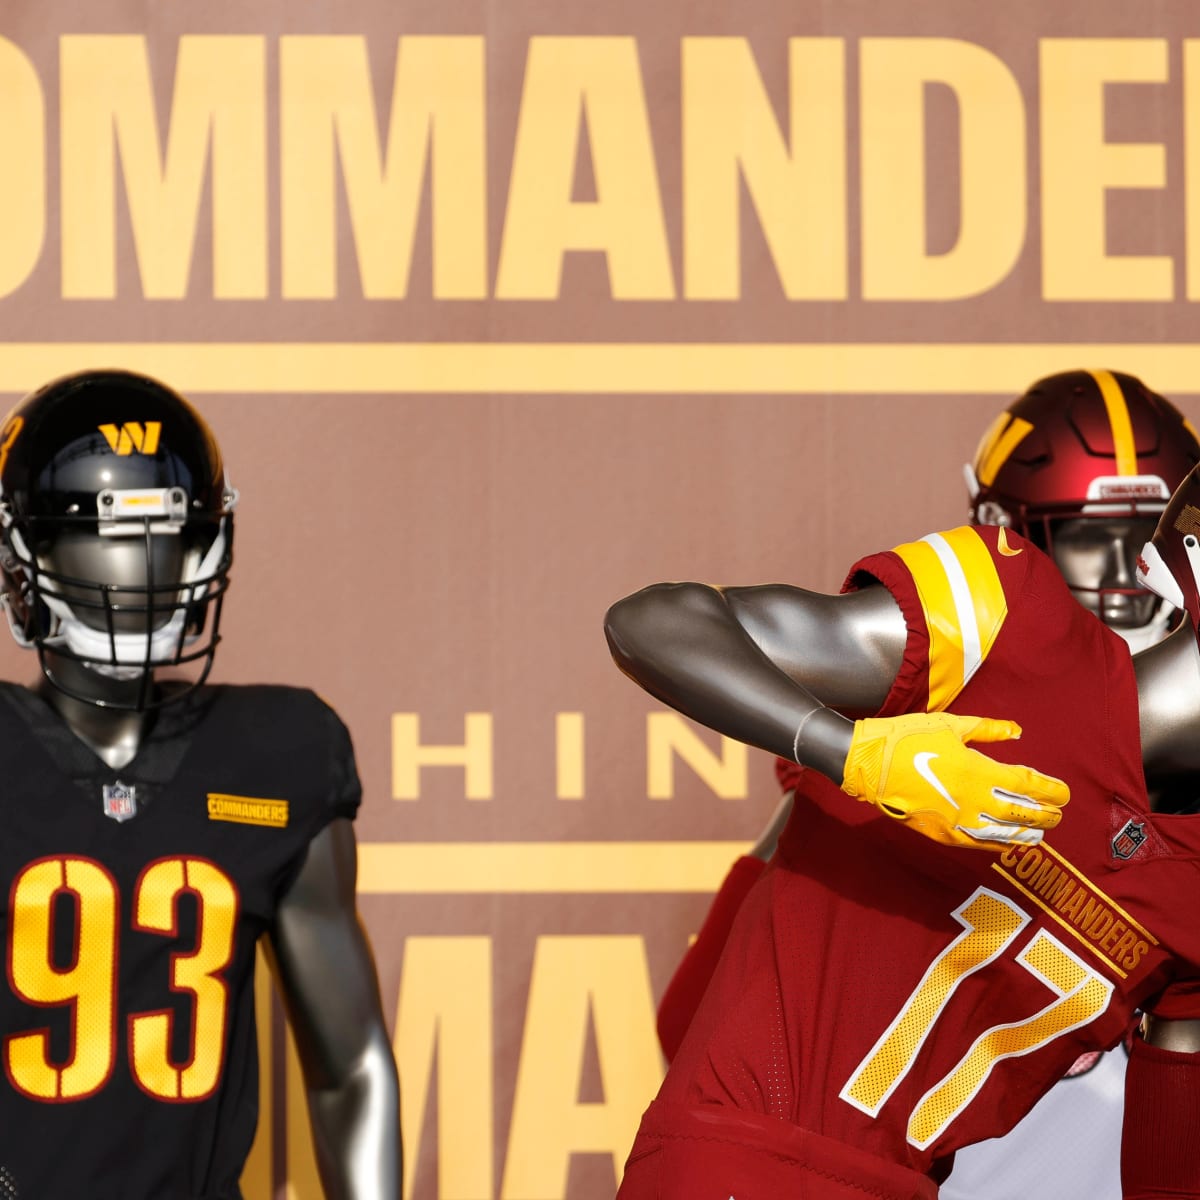 Washington Commanders NFL team reveal name change after leaked photo